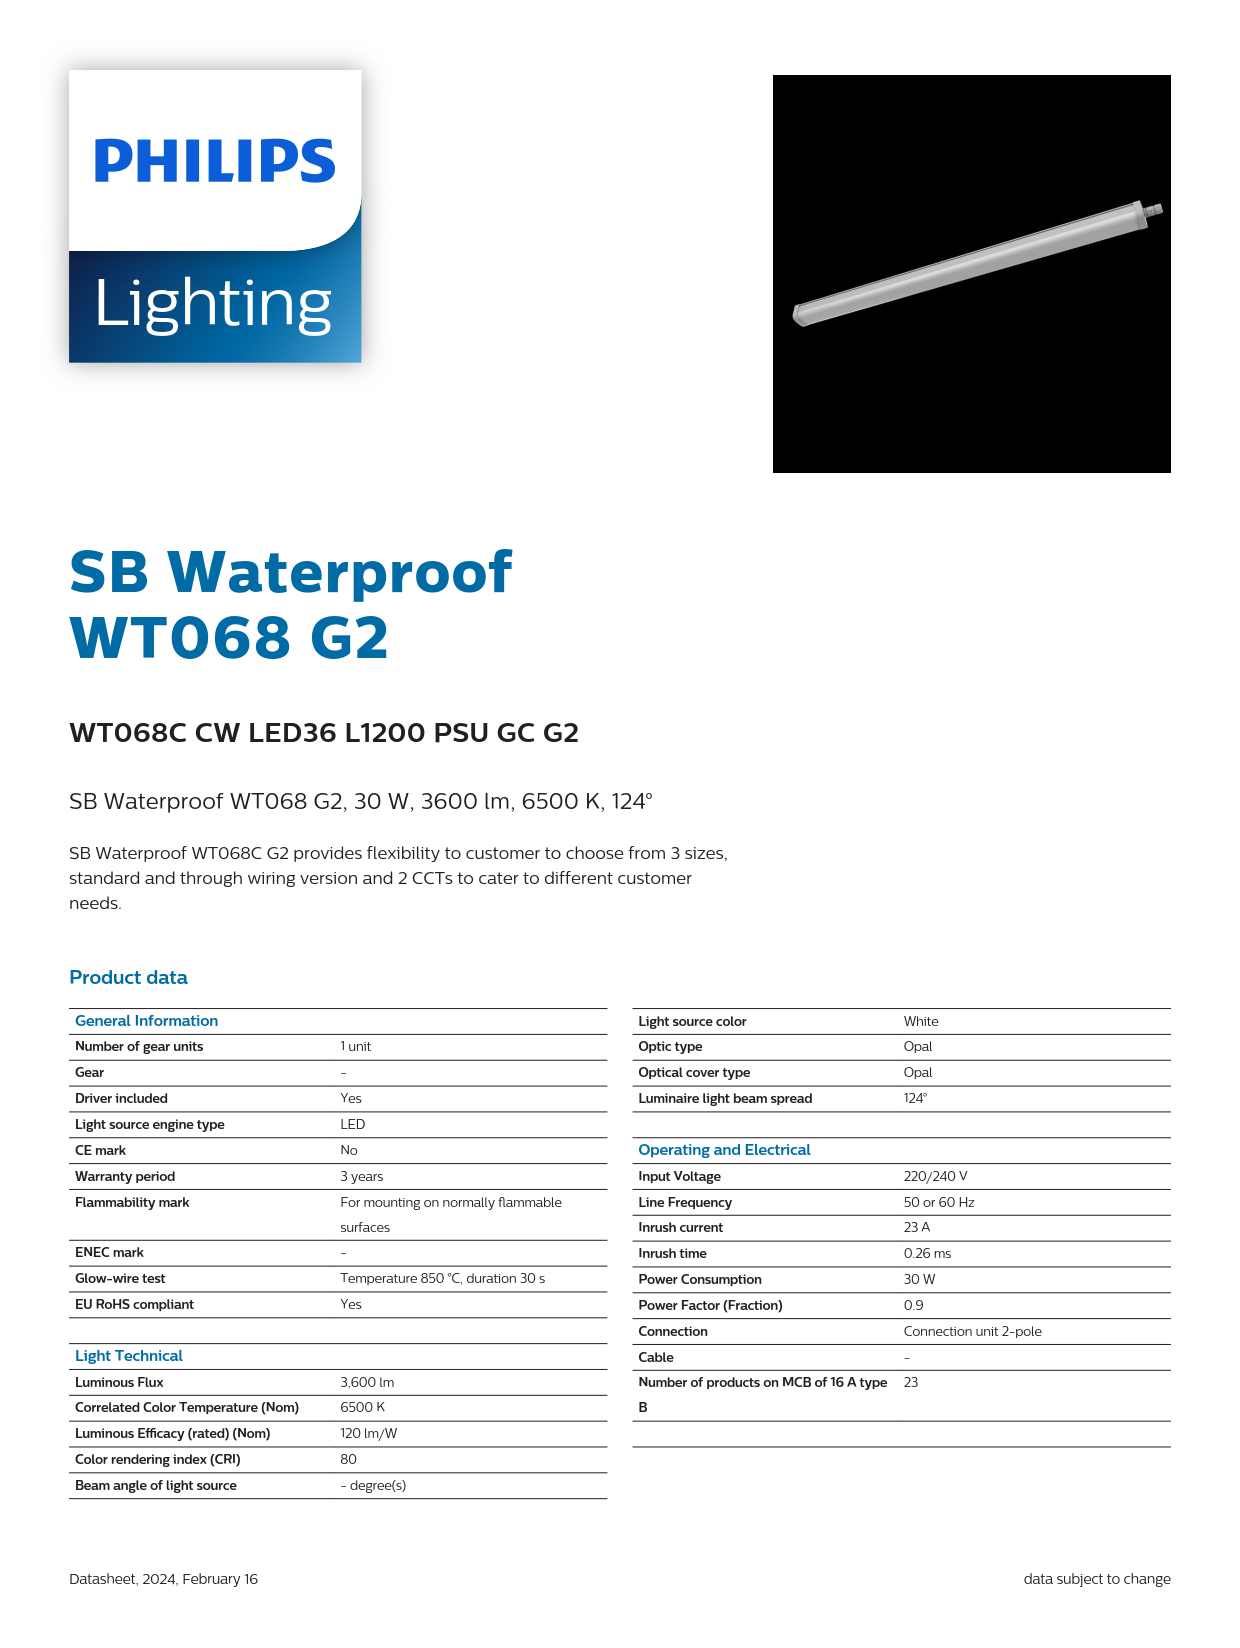 PHILIPS Waterproof Fixture light WT068C CW LED36 L1200 PSU GC G2 911401861585